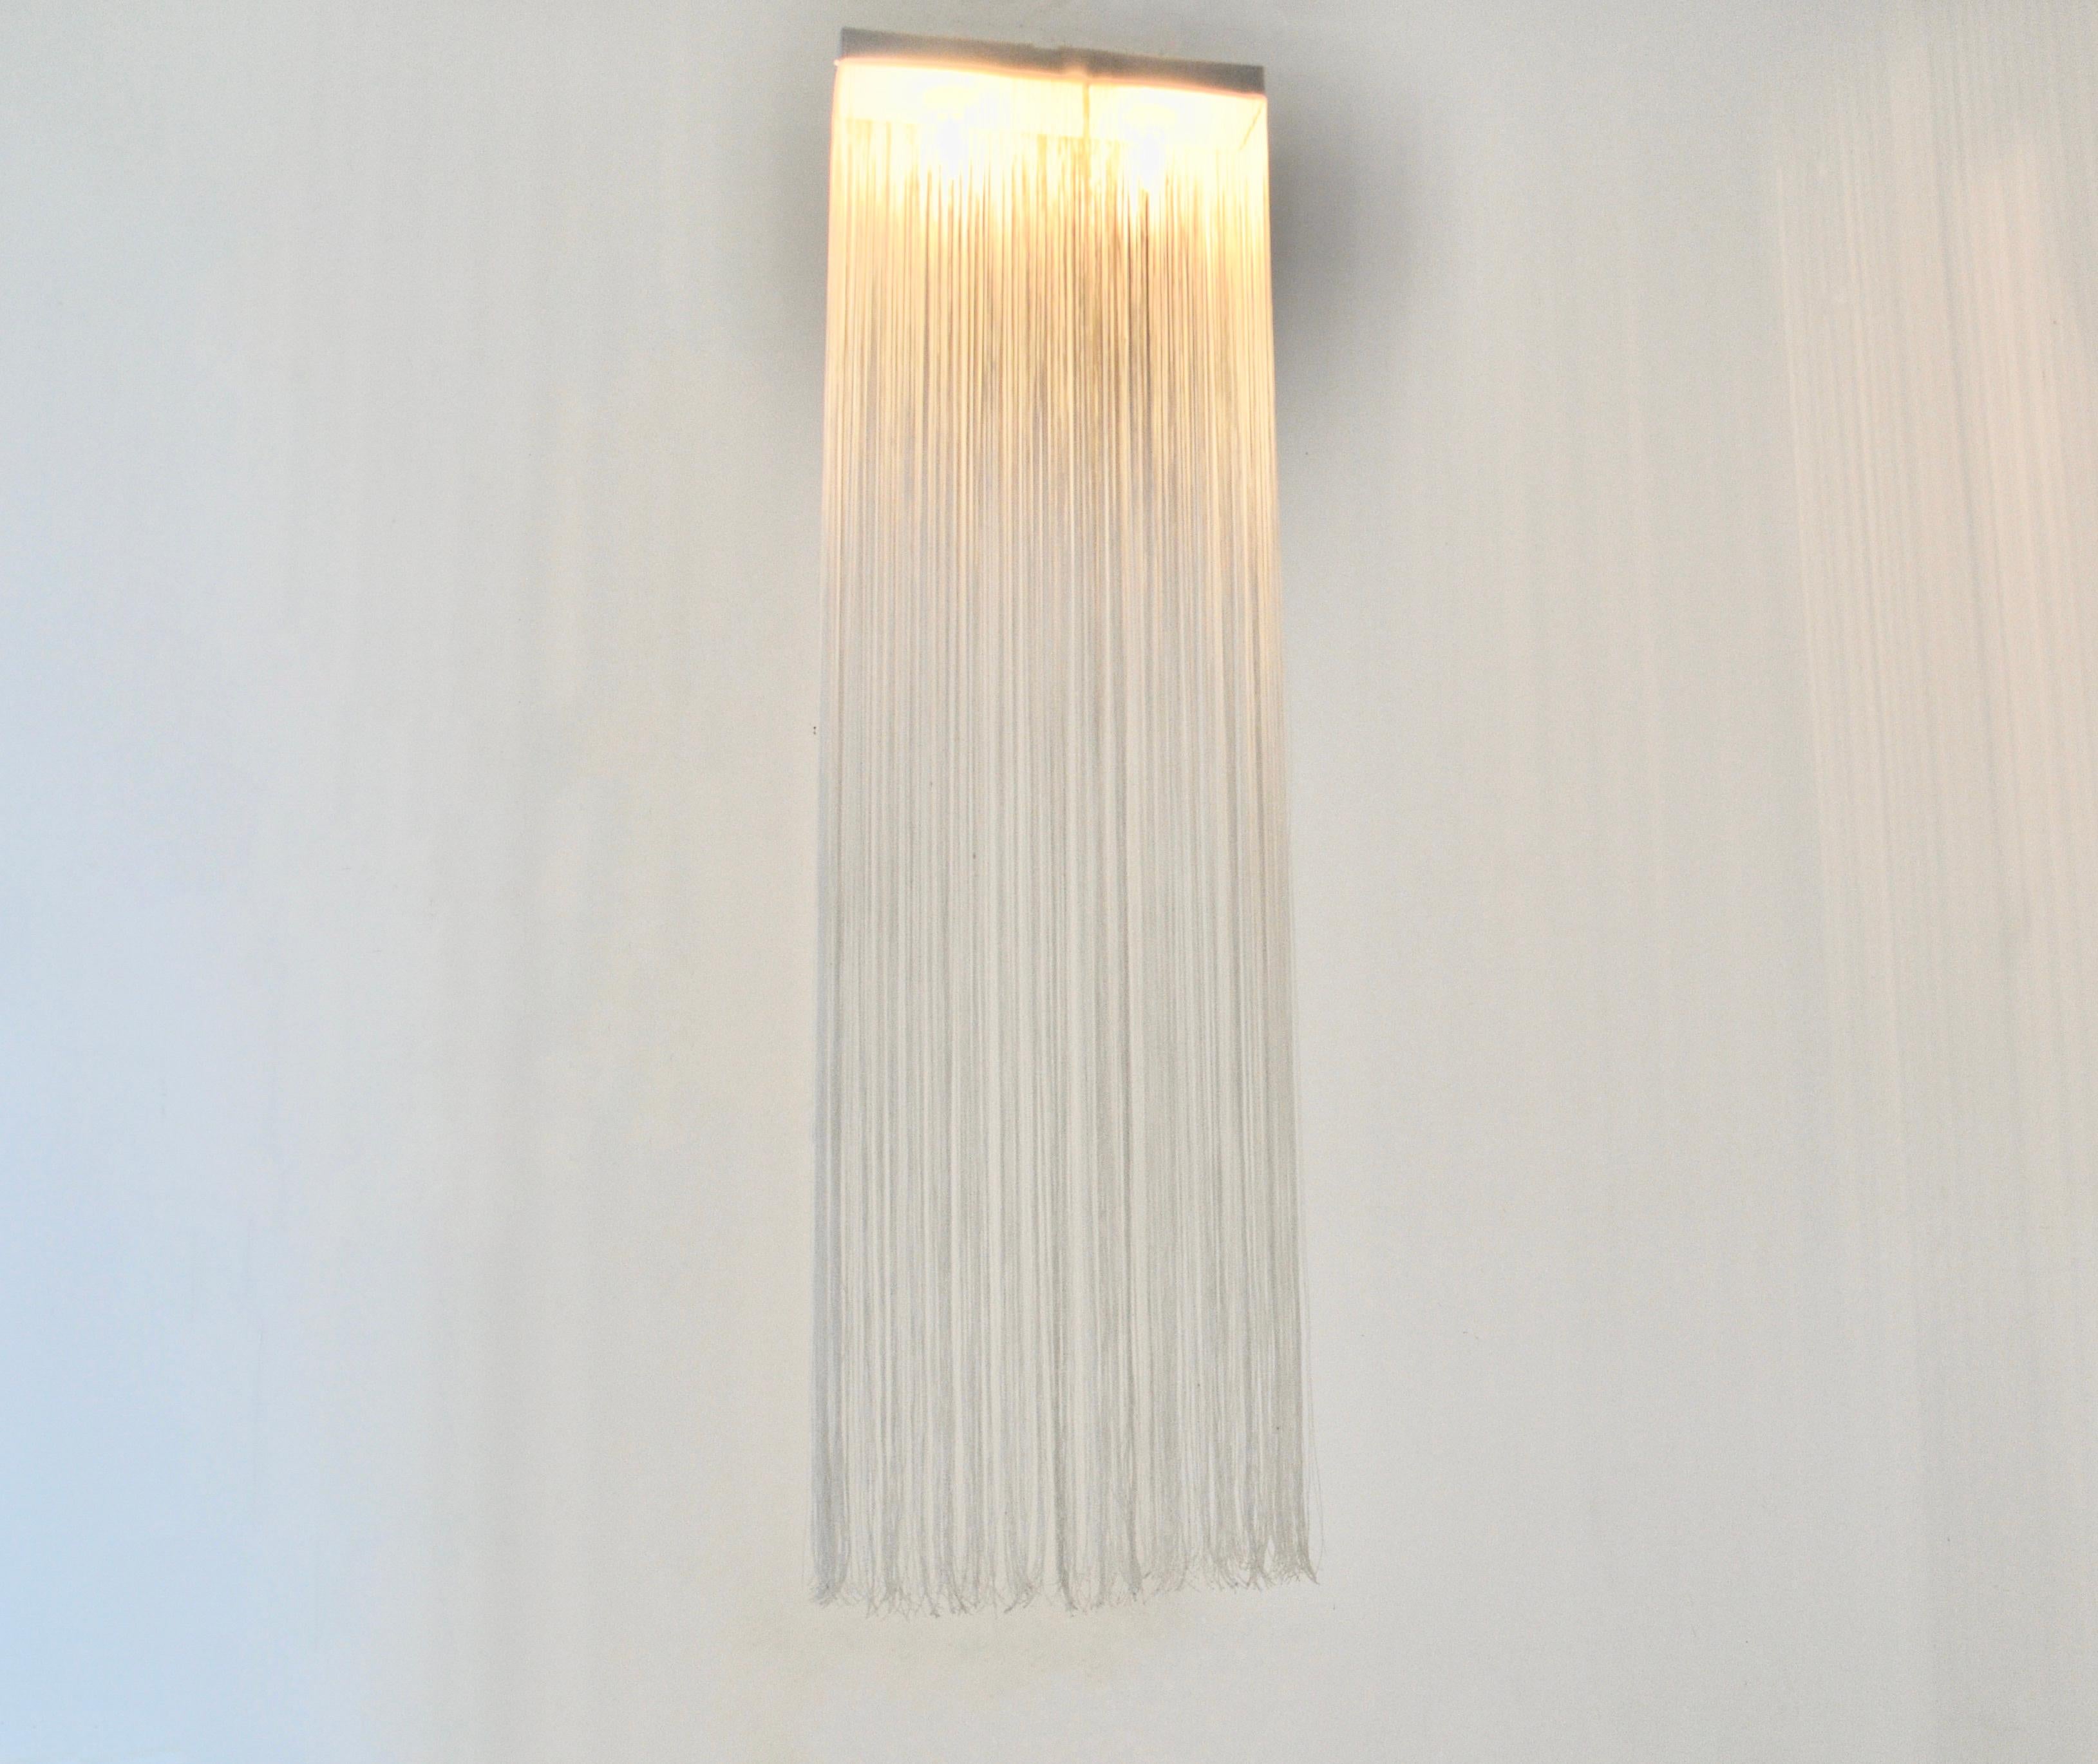 Ceiling light with fabric fringes designed by Mariyo Yagi. Stamped Sirrah, Mariyo Yagi. Wear due to time and age. 